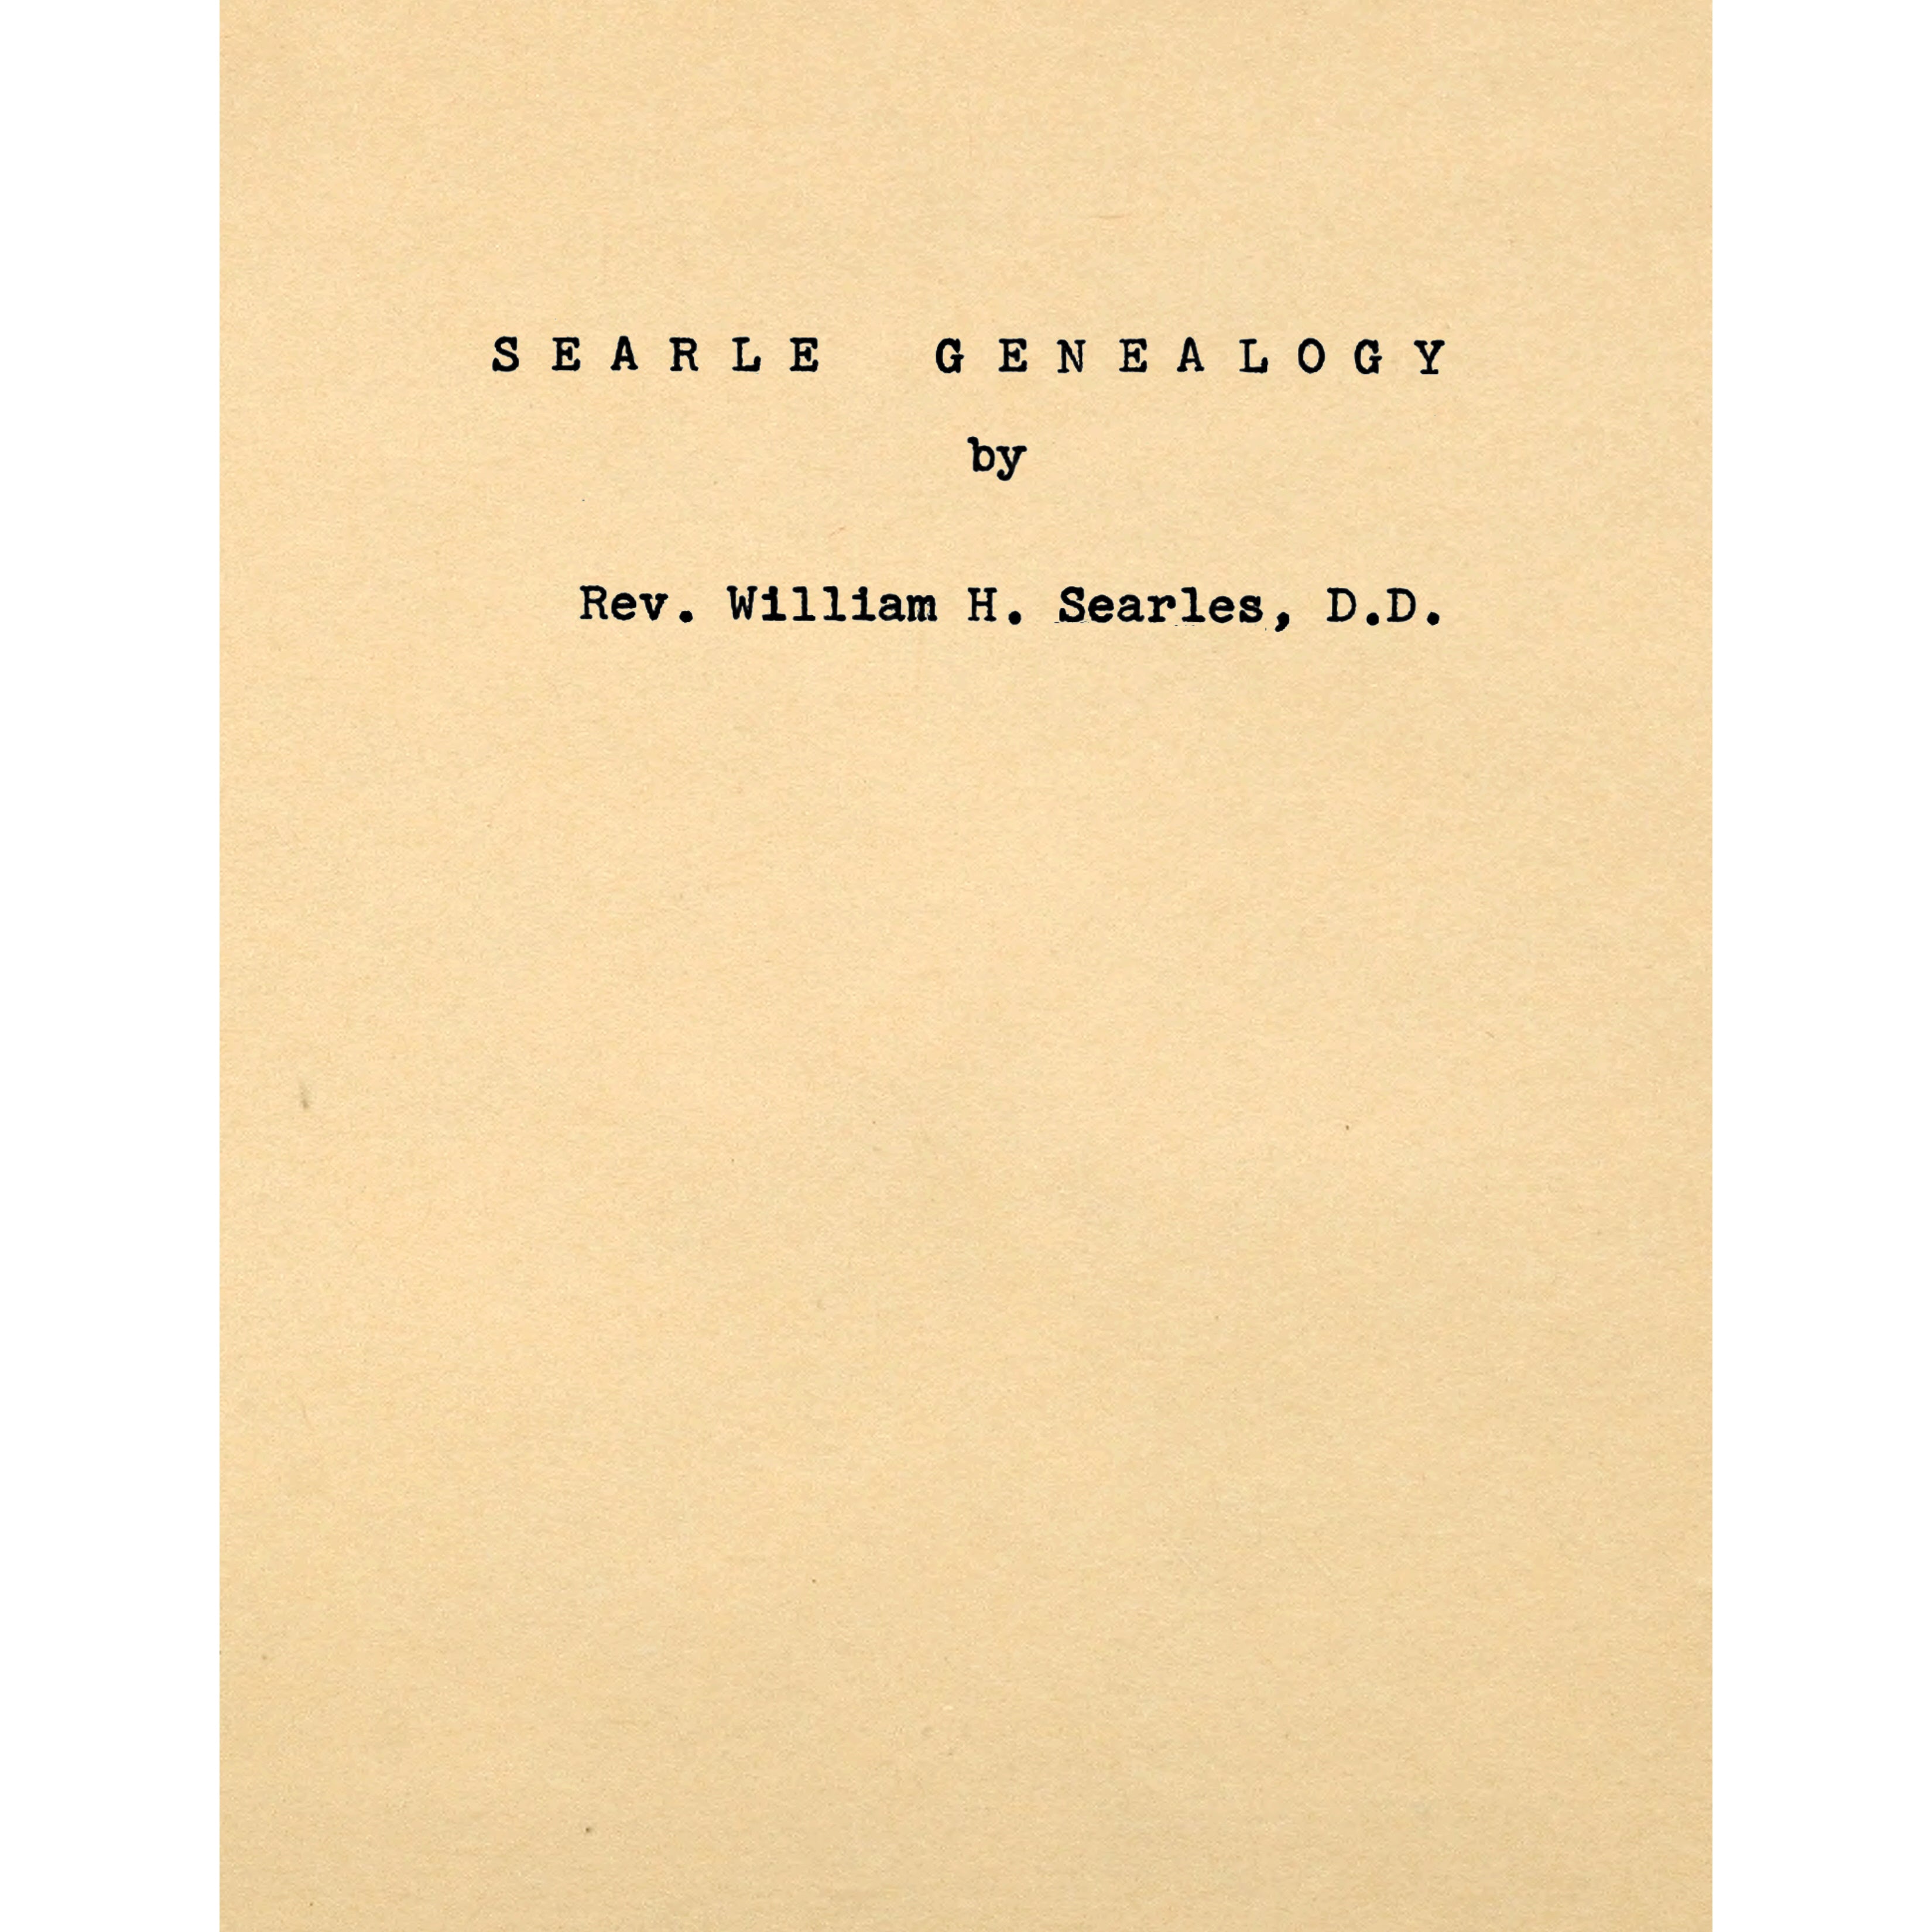 Searle Genealogy